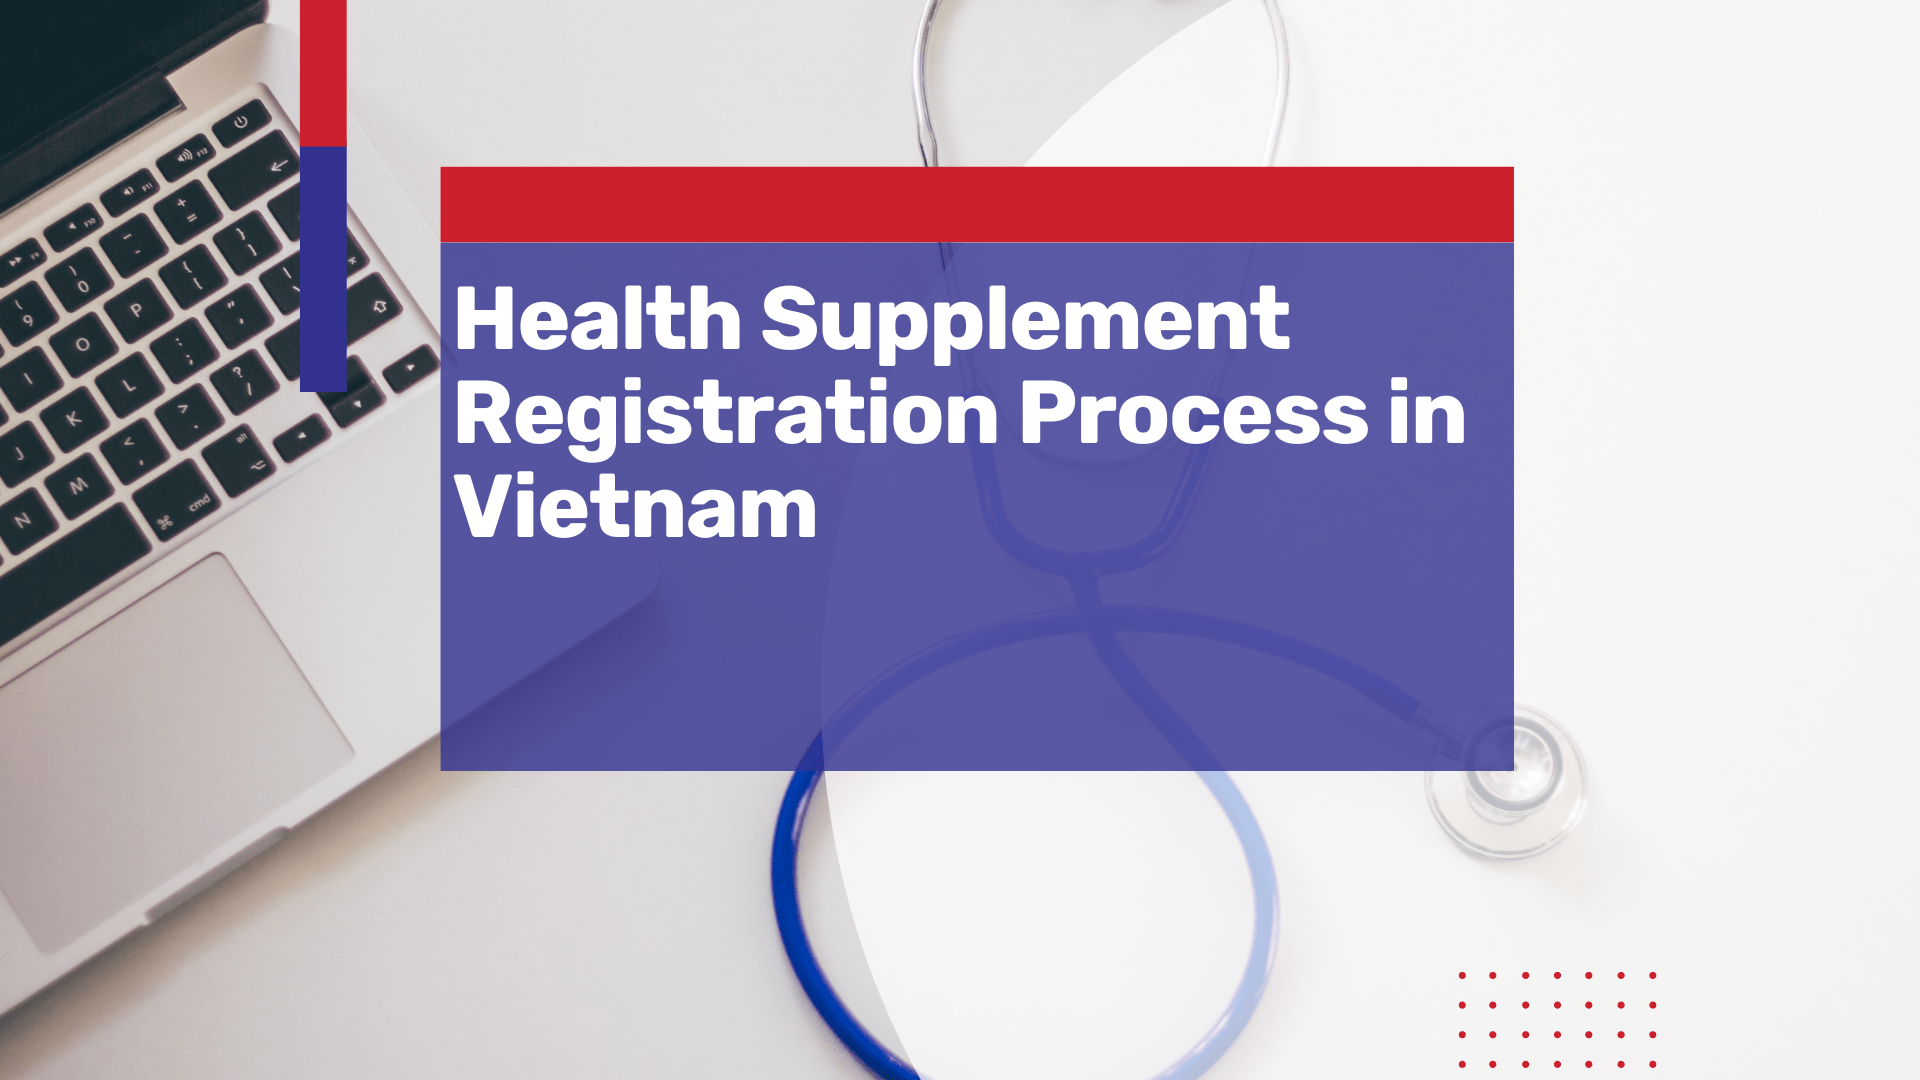 Guide to Health Supplement Registration in Vietnam